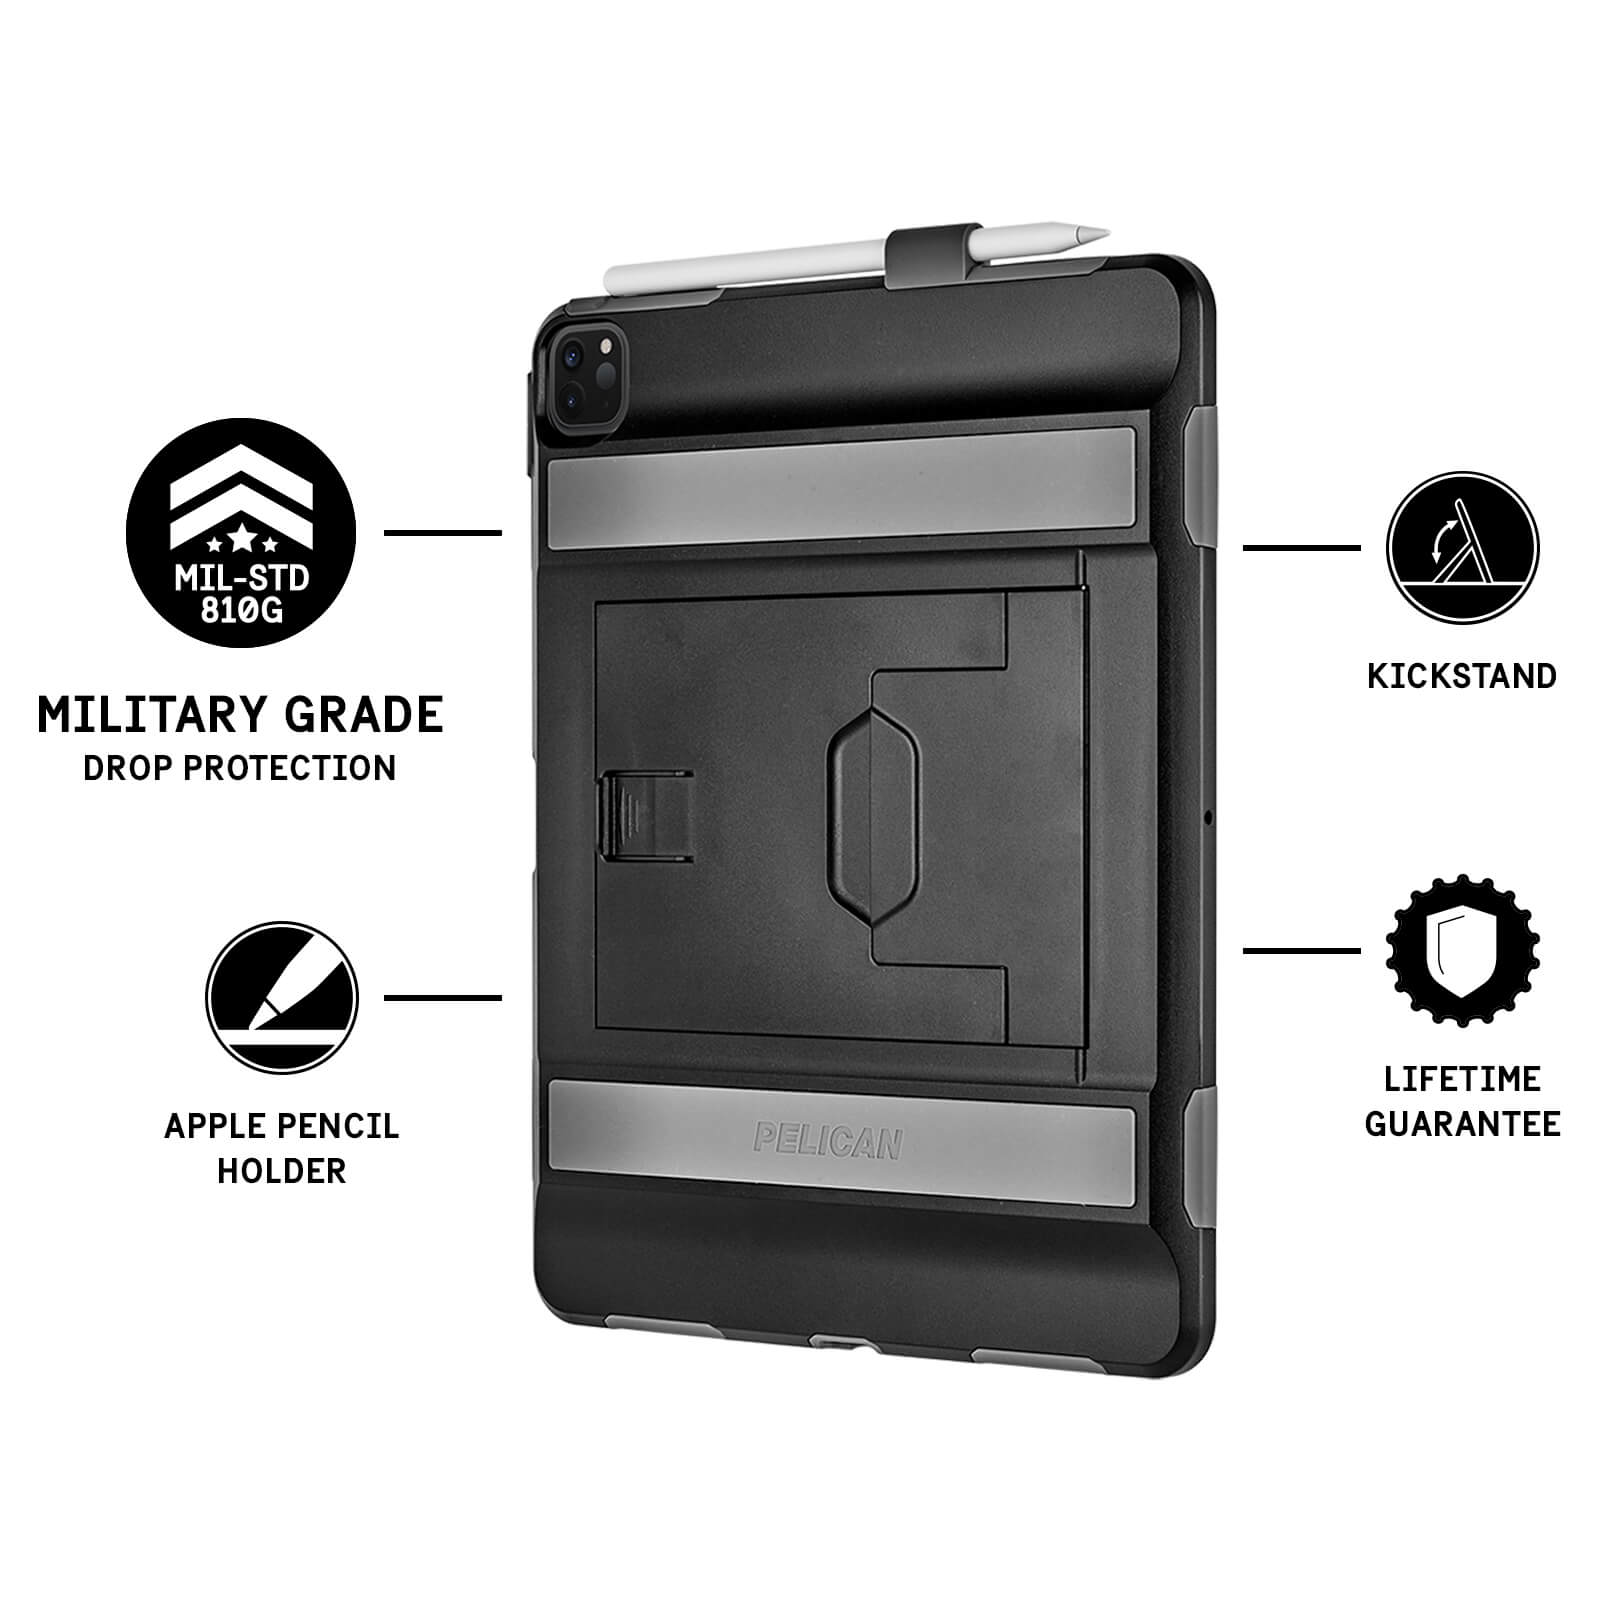 Features Military Grad Drop Protection, Apple Pencil Holder, Kickstand, Lifetime Guarantee. color::Black/Gray